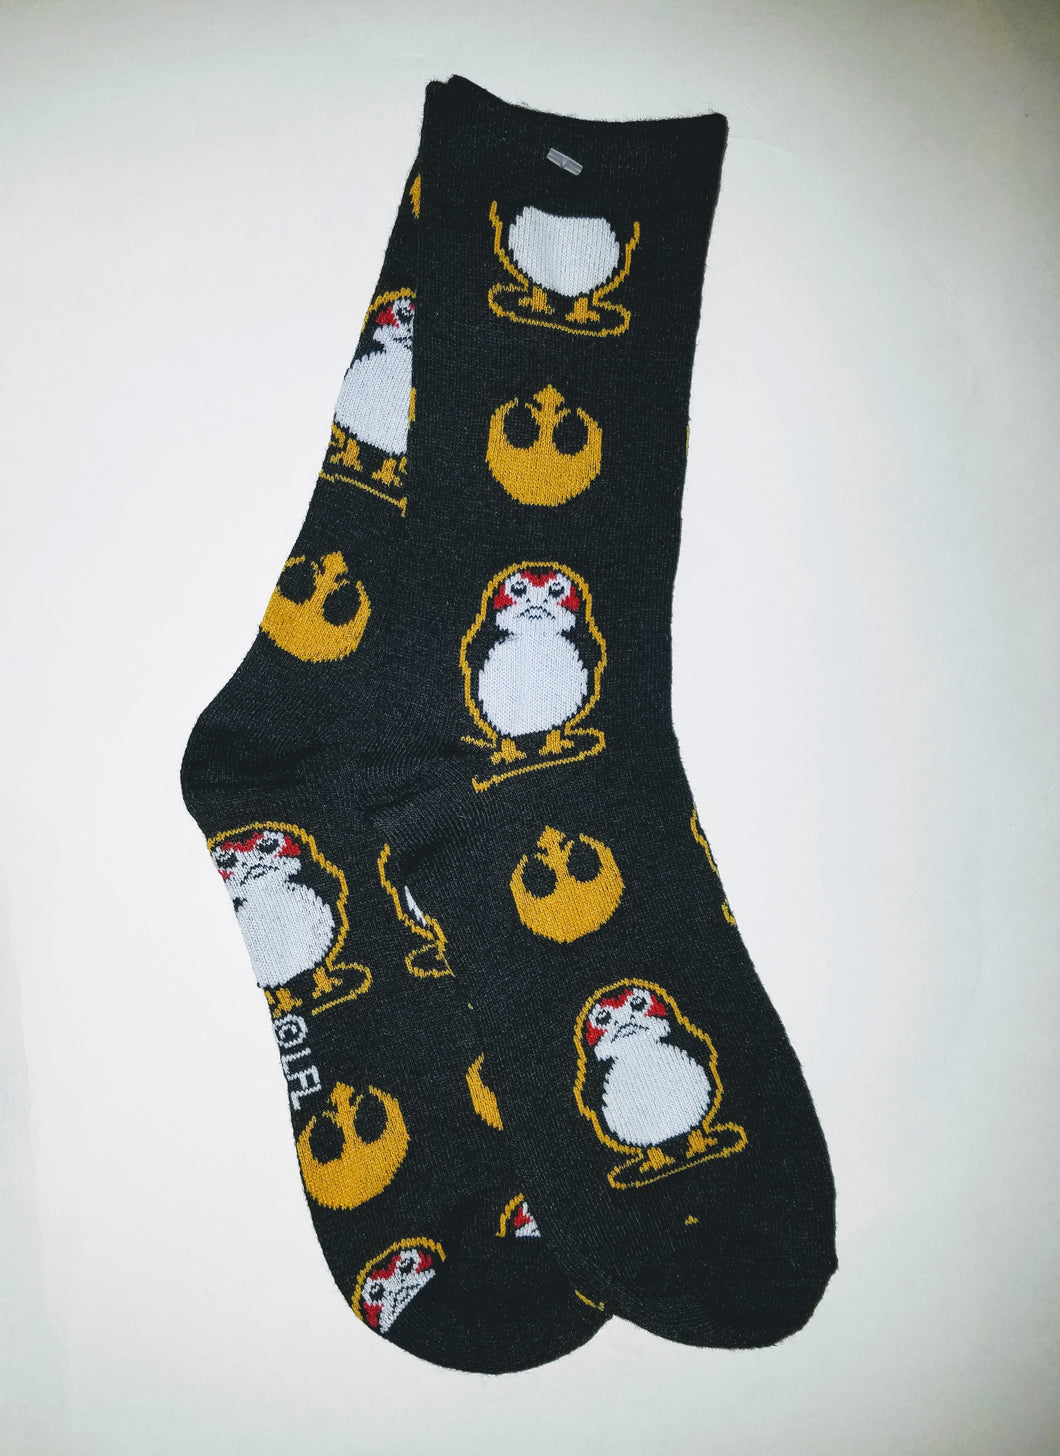 Porg Star Wars Socks